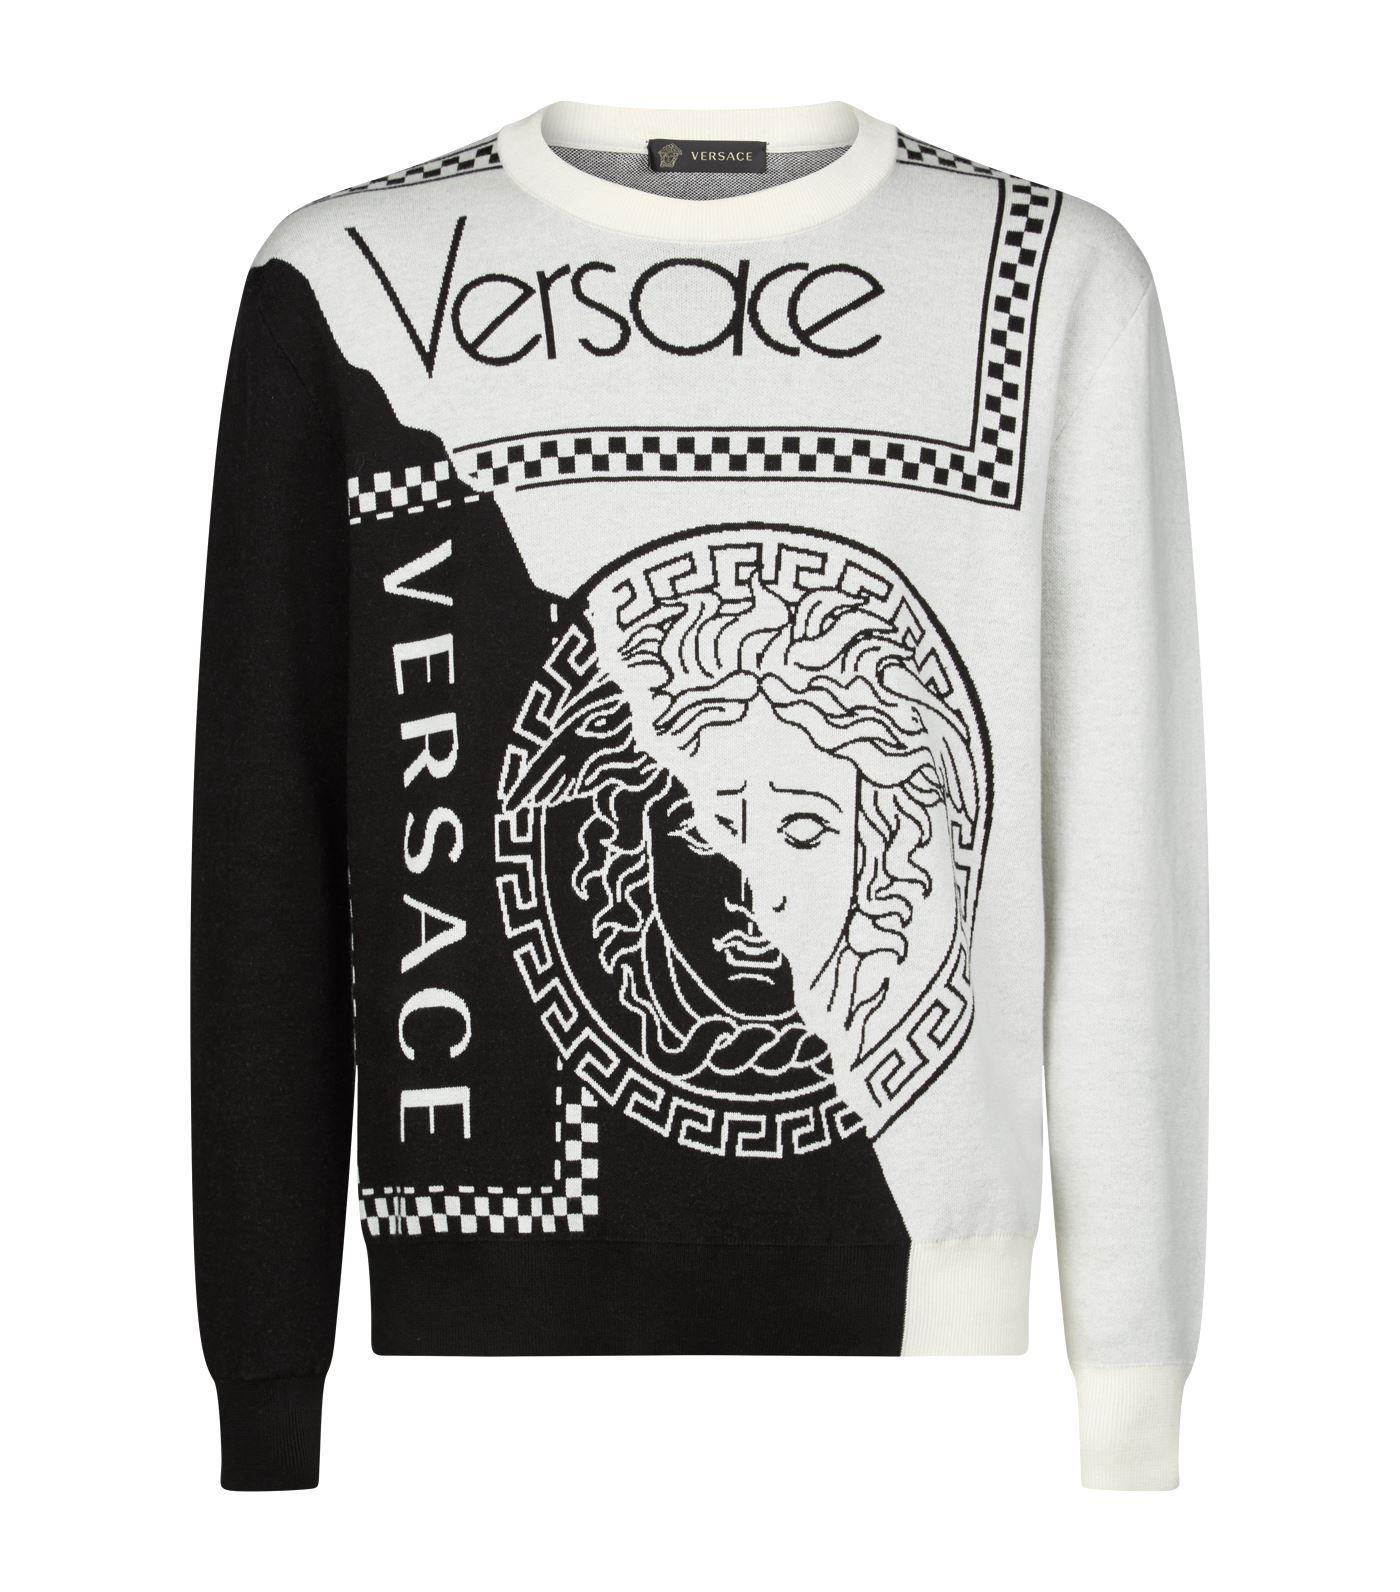 Versace Graphic Medusa Sweater in Black for Men - Lyst